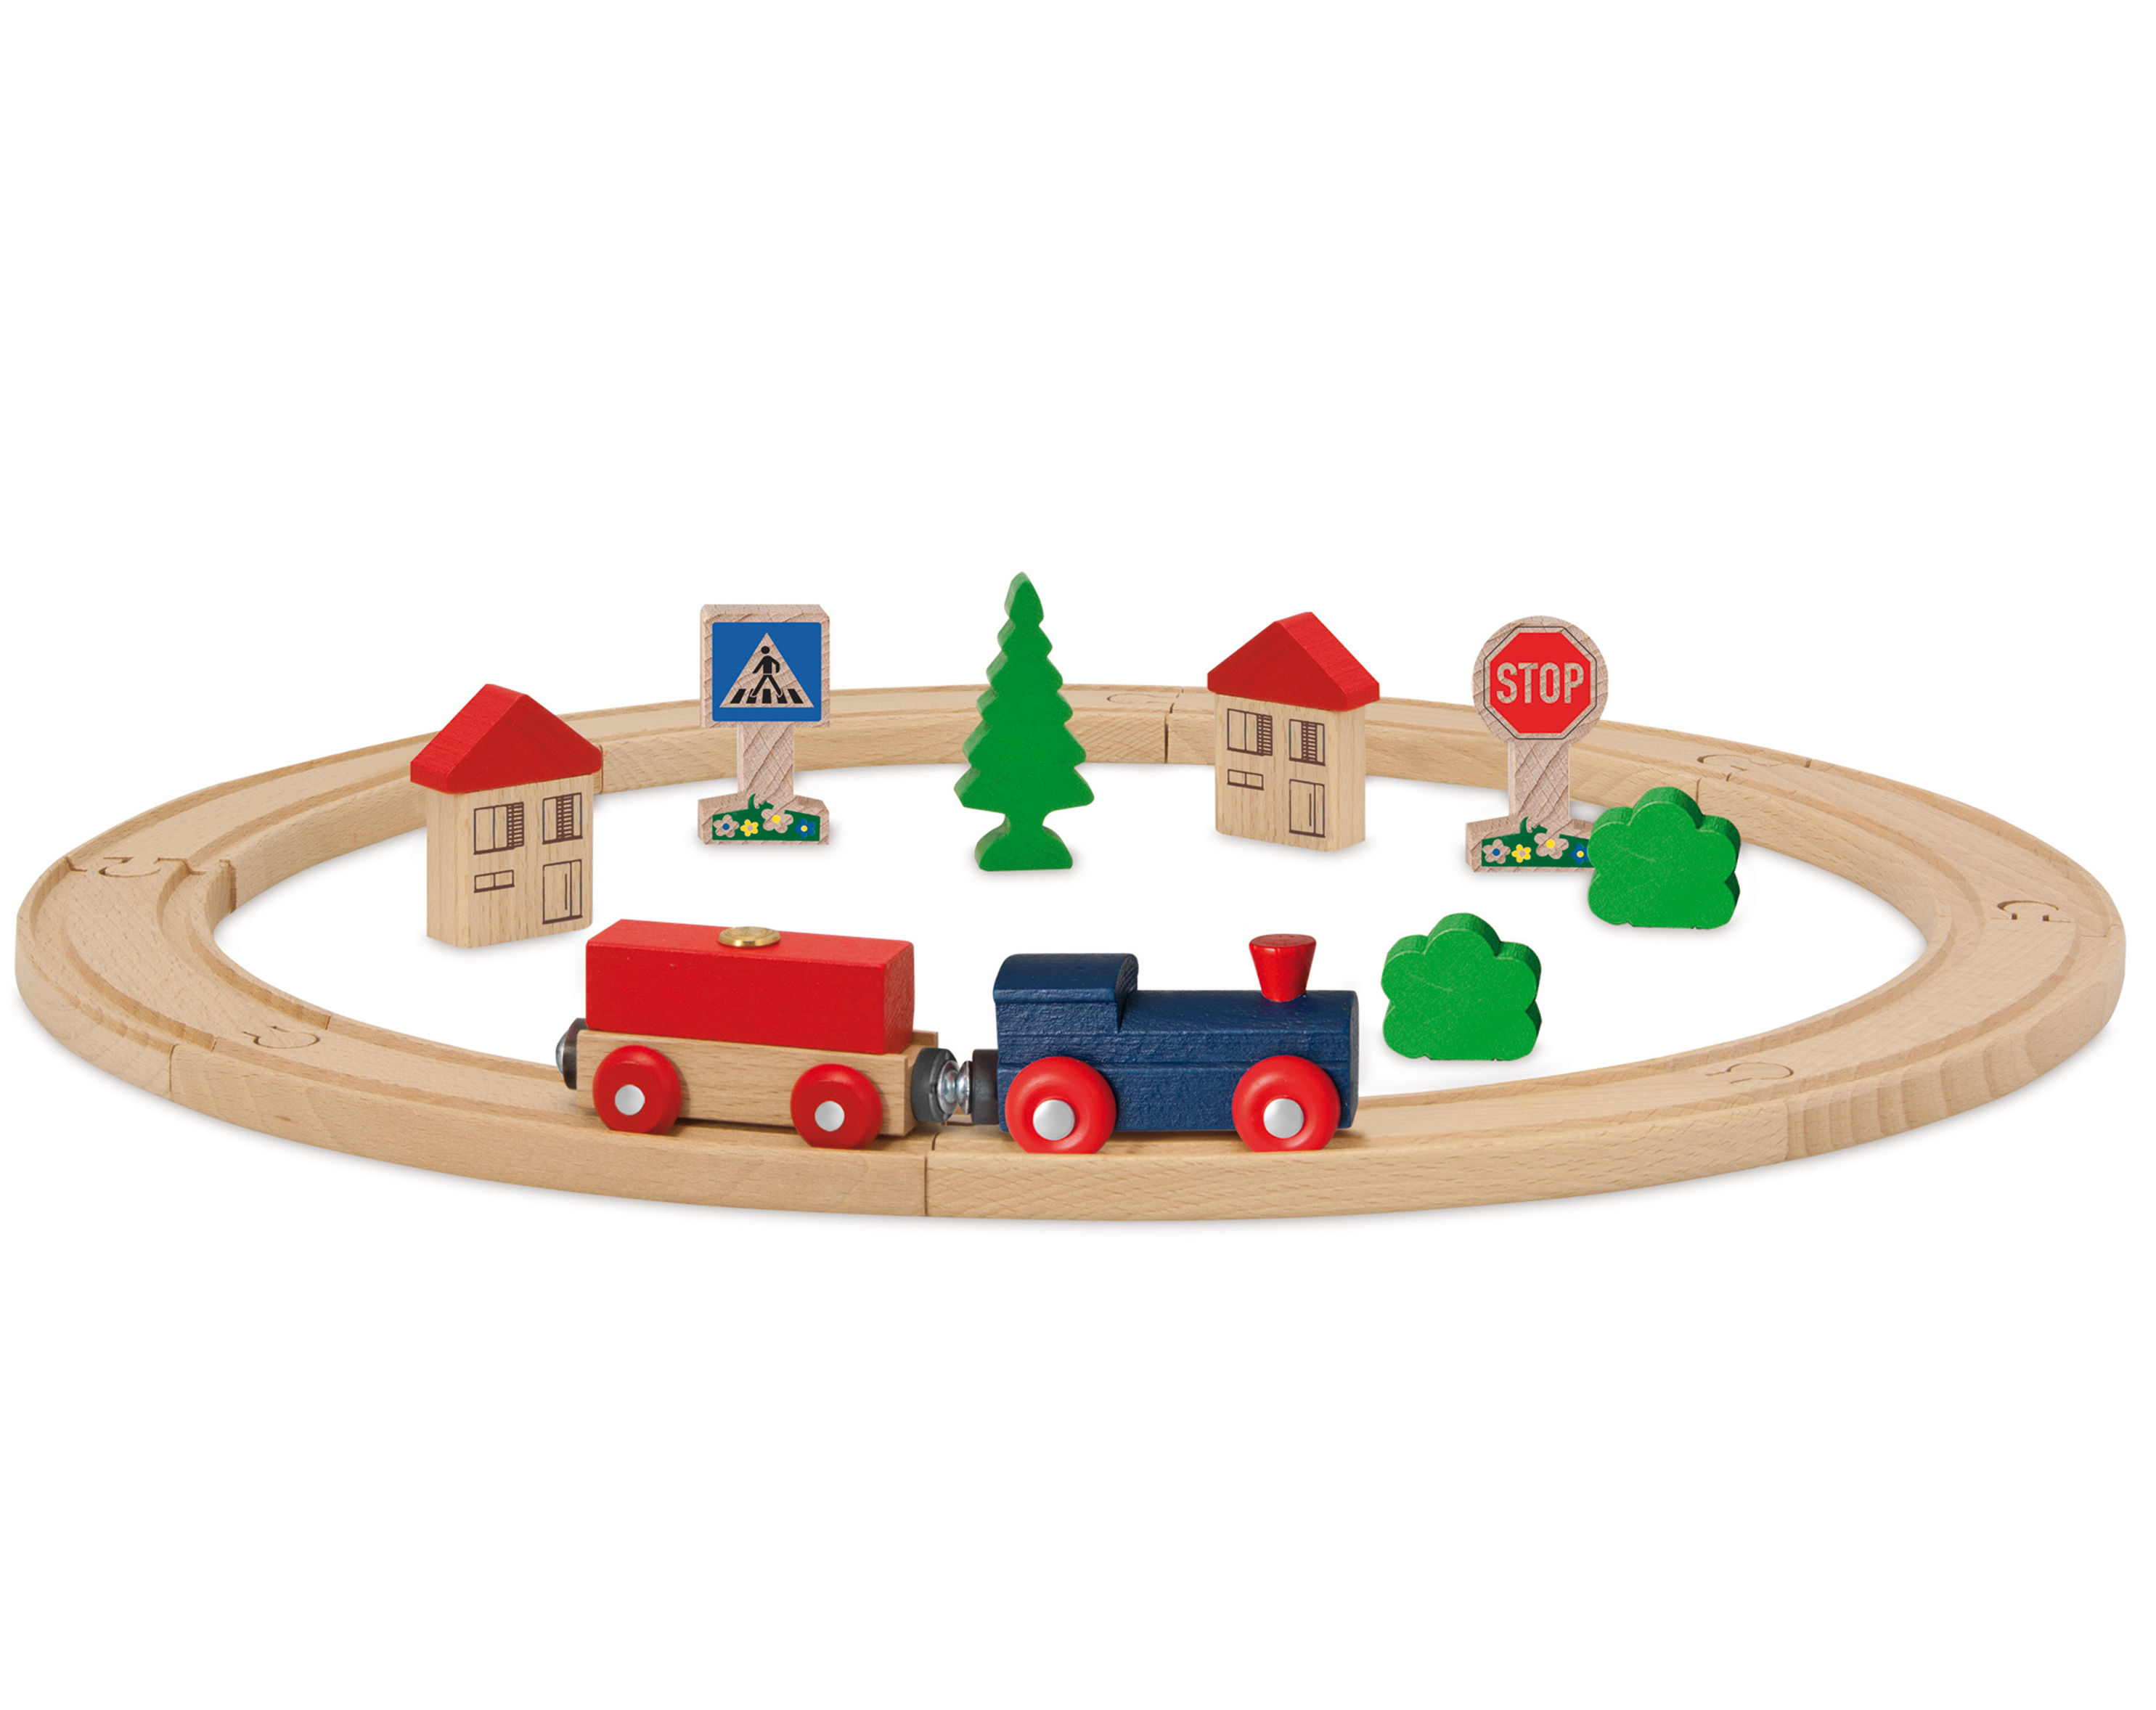 Spielzeug-Eisenbahn KREIS 20-teilig aus Holz | Weltbild.at